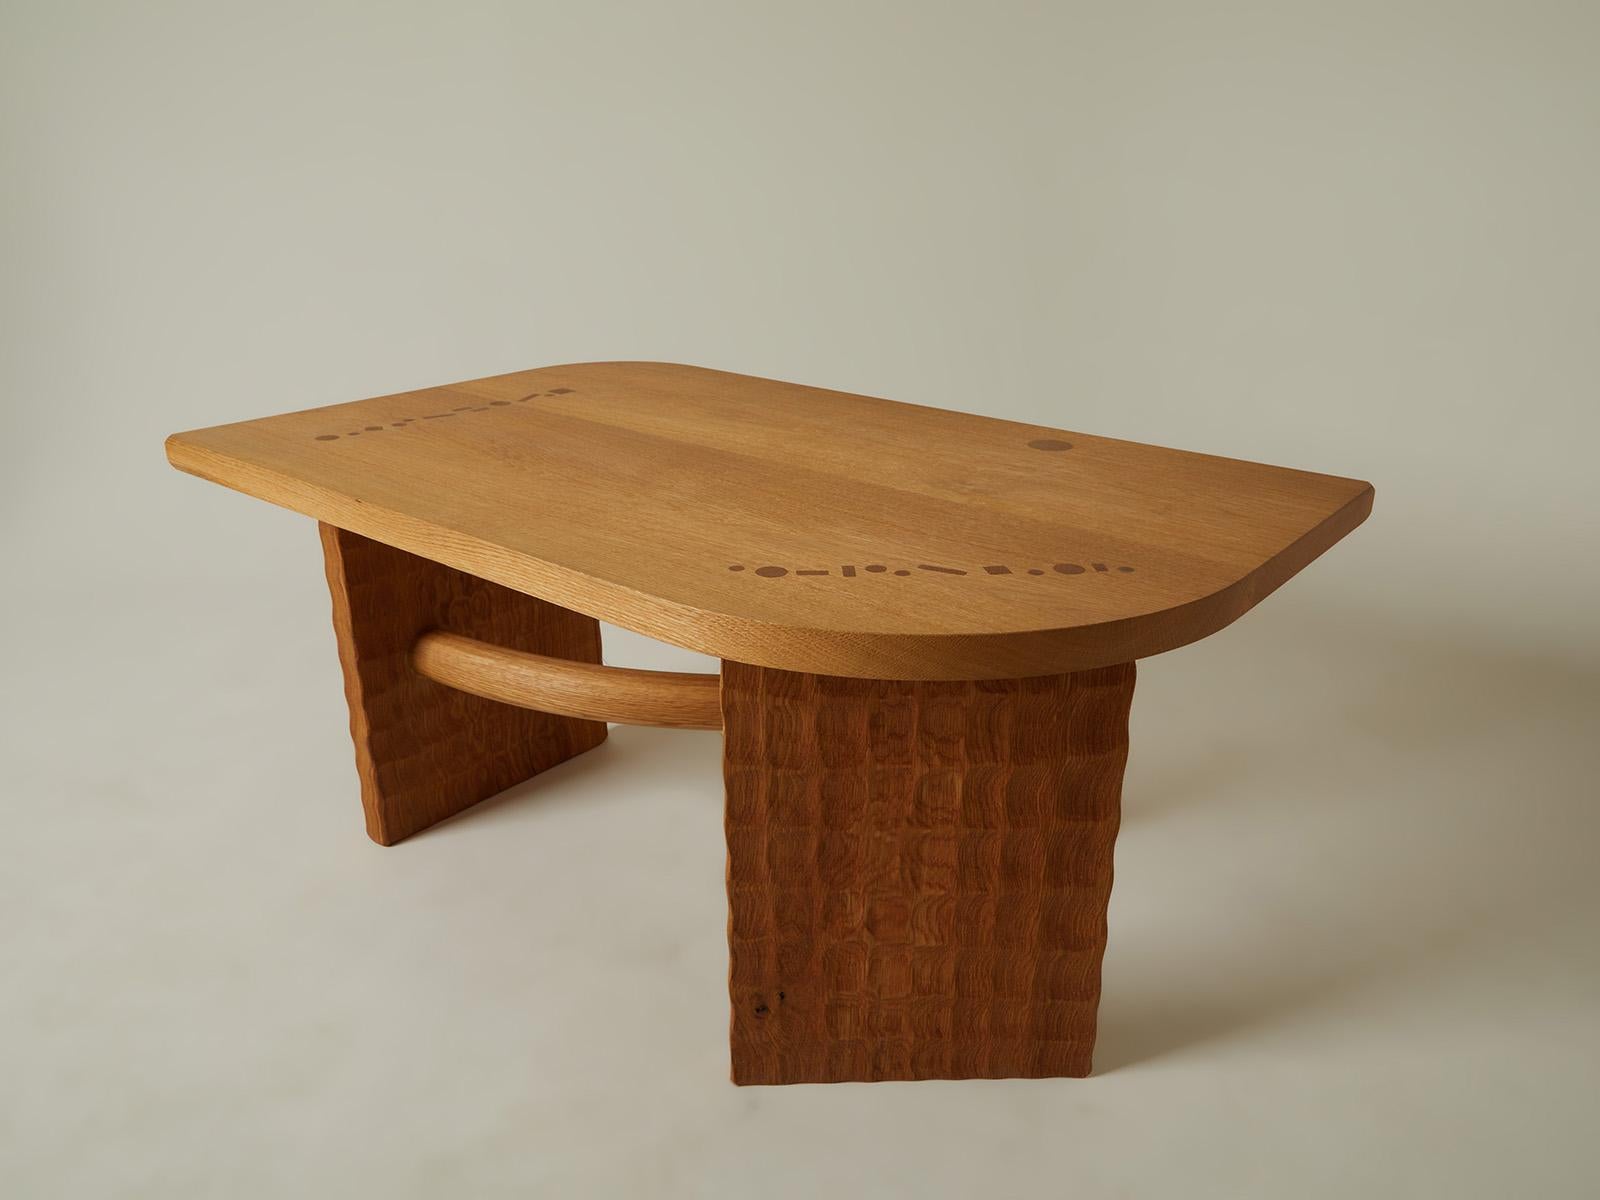 Modern Hand-Carved Sculptural White Oak Sabbagh Billot Coffee Table, Plant-Based Finish For Sale